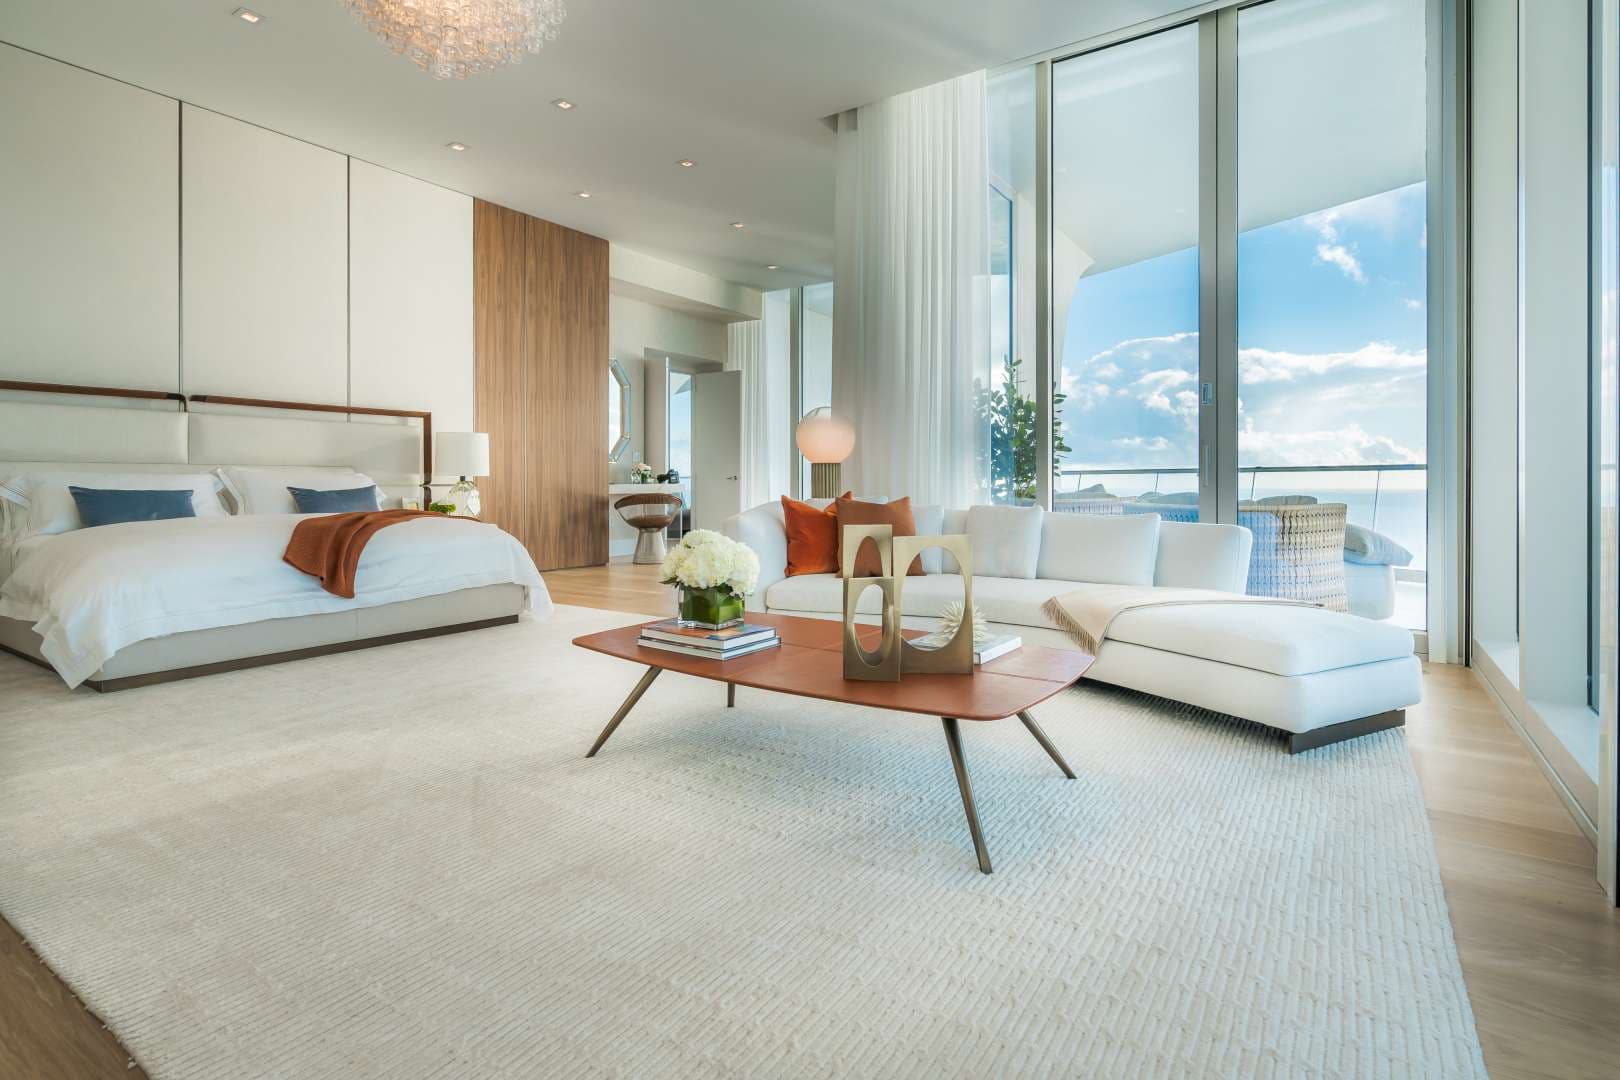 6 Bedroom Penthouse For Sale Miami Lp10448 1a75516cfbcb2c00.jpg